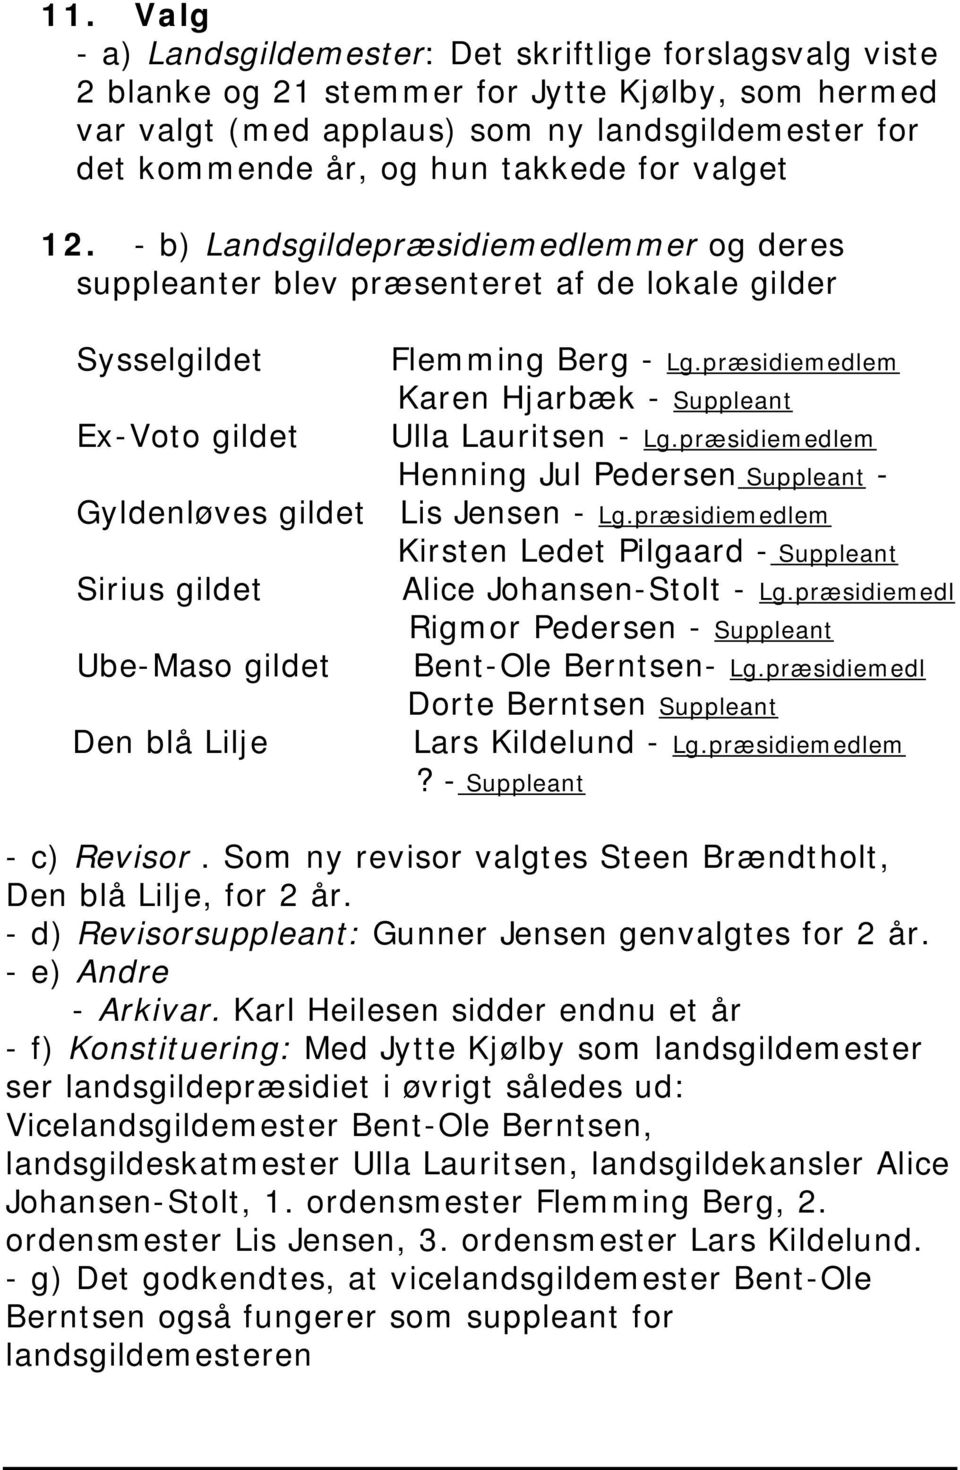 præsidiemedlem Karen Hjarbæk - Suppleant Ex-Voto gildet Ulla Lauritsen - Lg.præsidiemedlem Henning Jul Pedersen Suppleant - Gyldenløves gildet Lis Jensen - Lg.